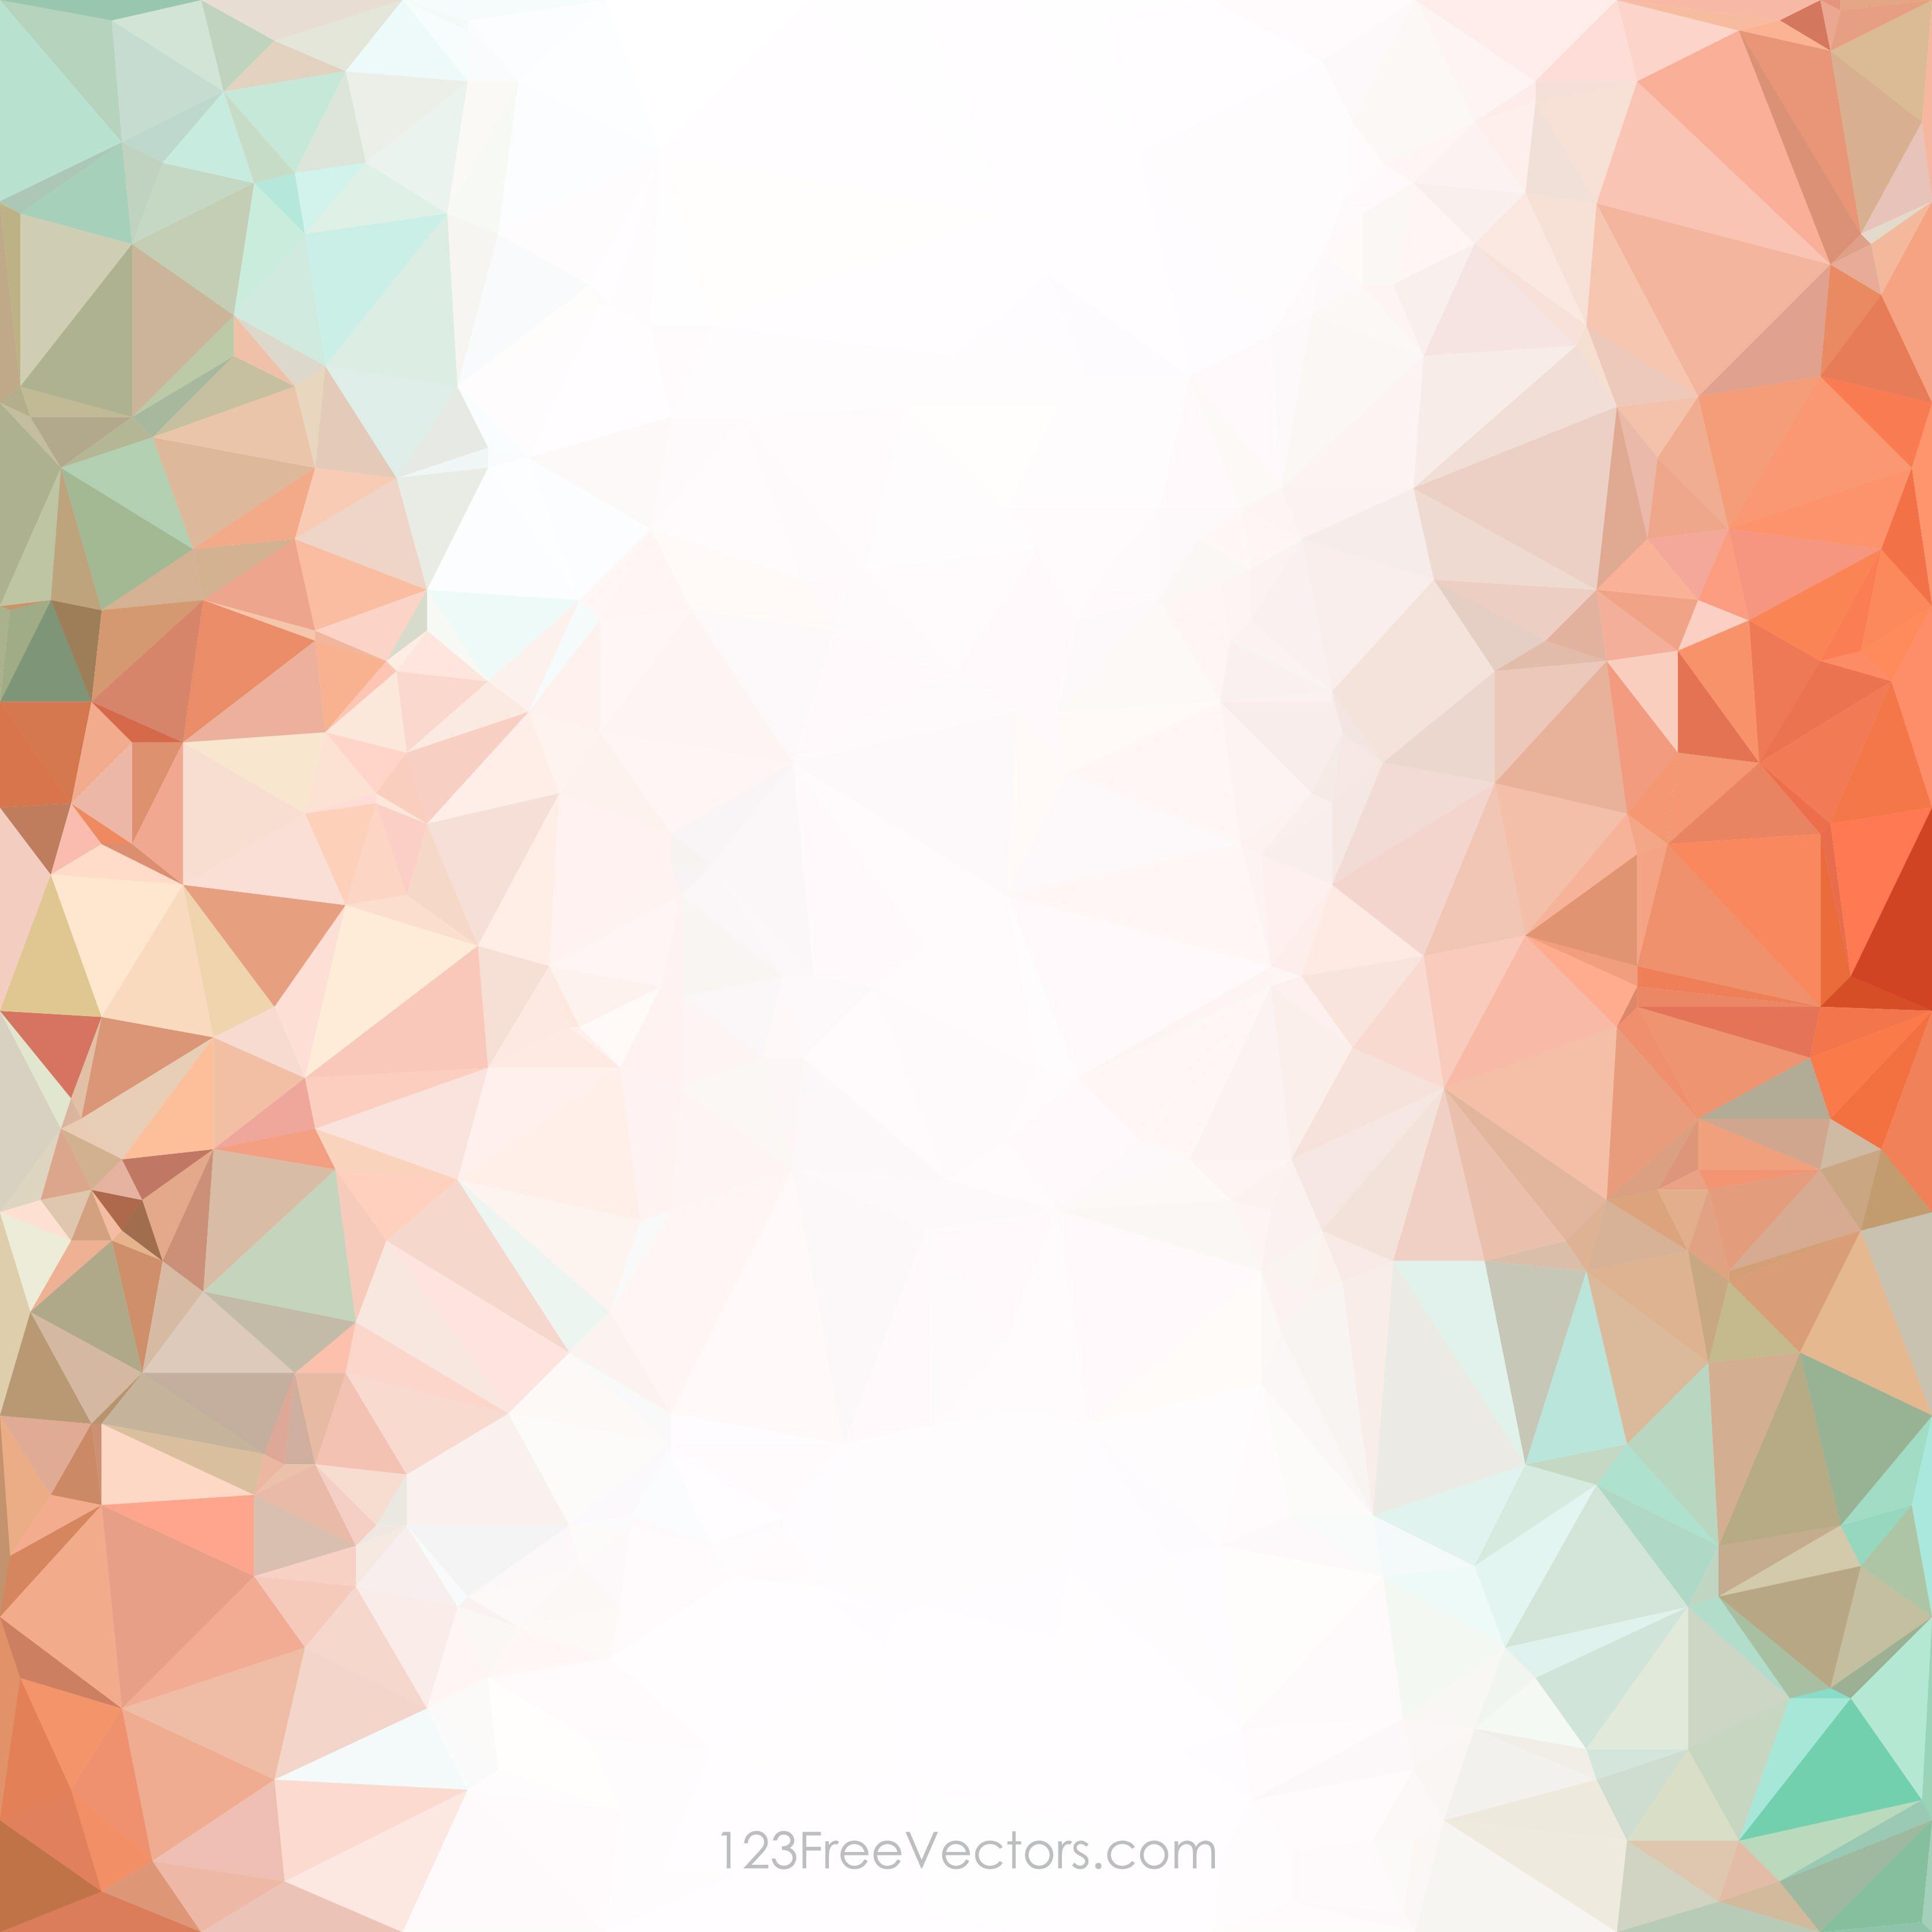 Light Color Low Poly Background Clip ArtFreevectors